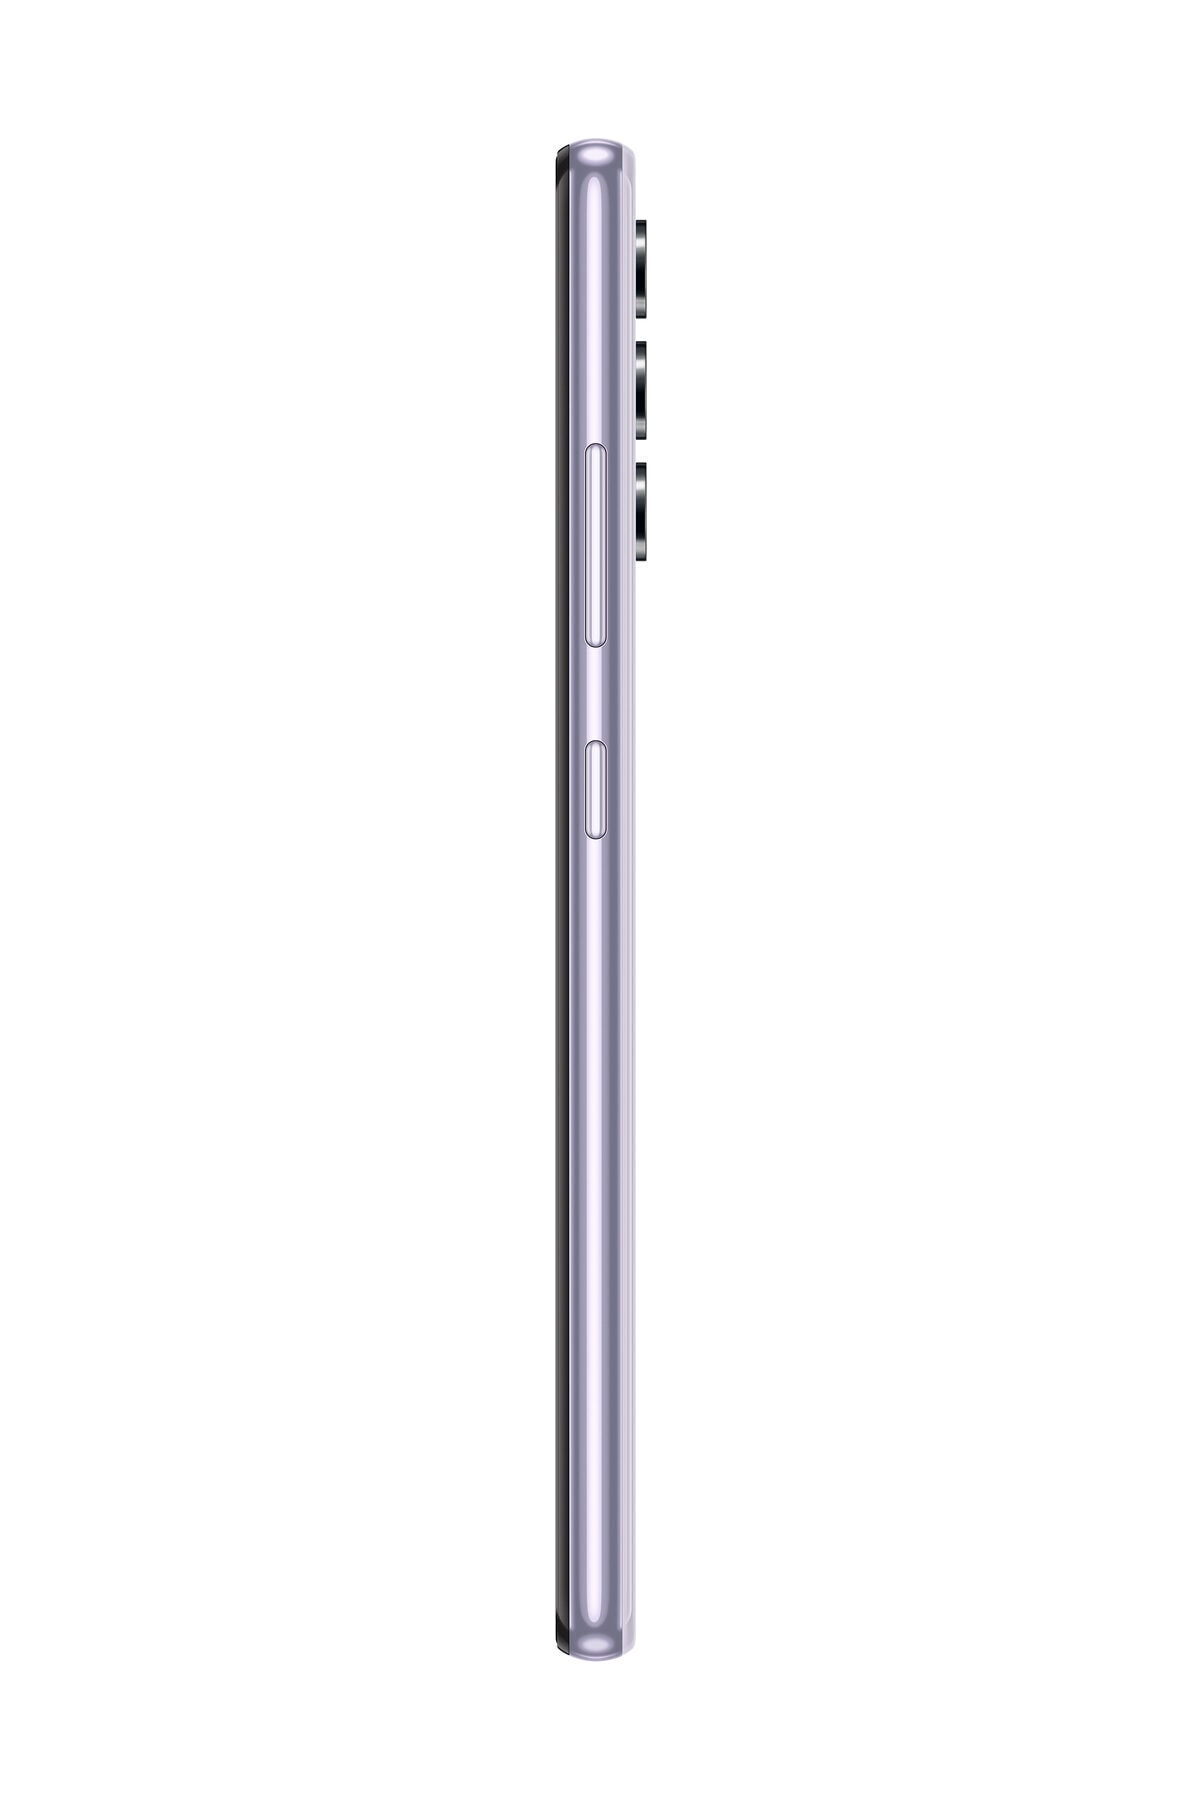 Galaxy A32 128 GB Lavanta Cep Telefonu (Samsung Türkiye Garantili)